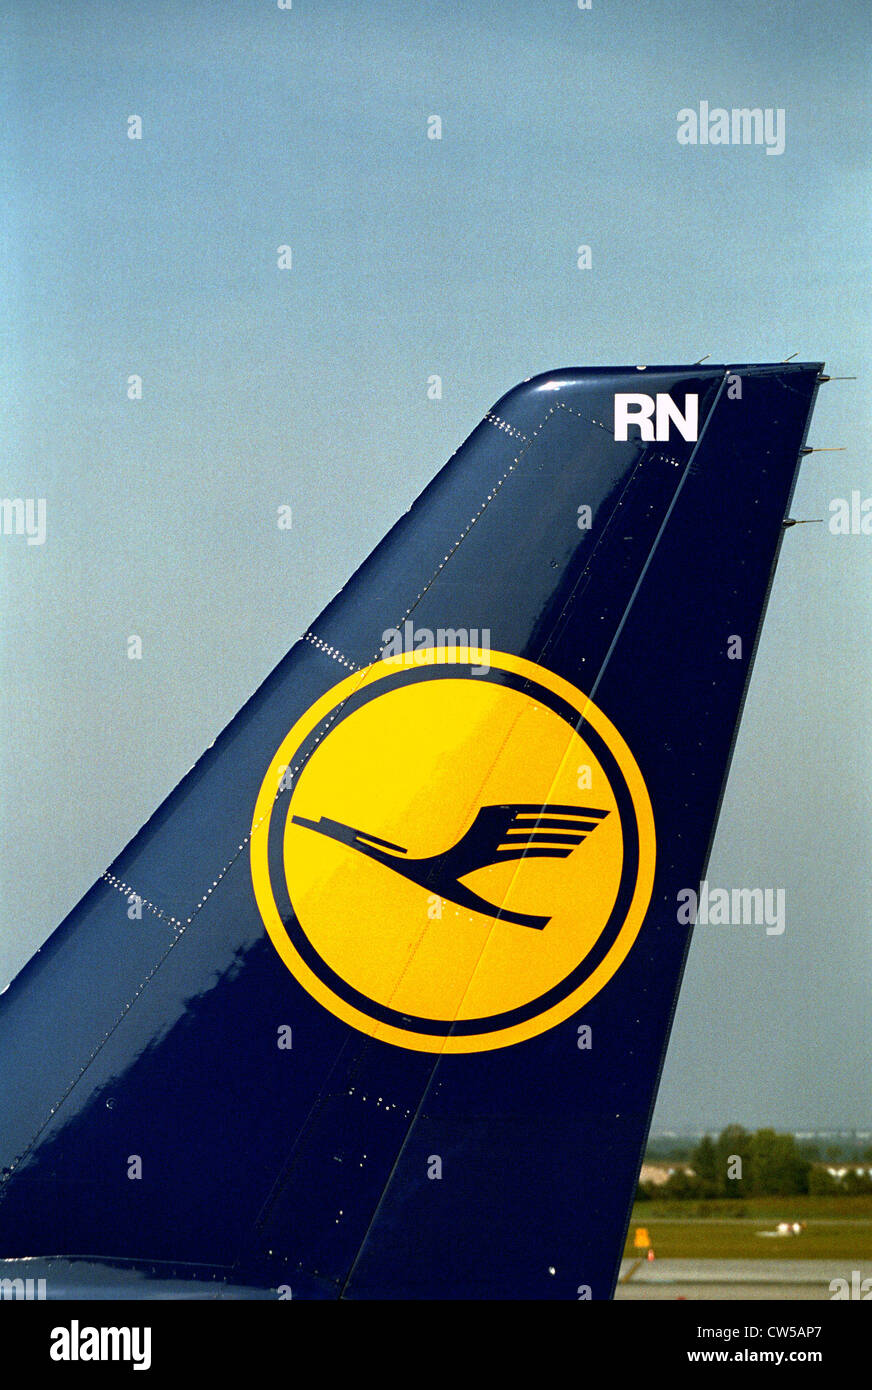 Fin of an aircraft with Lufthansa logo Stock Photo